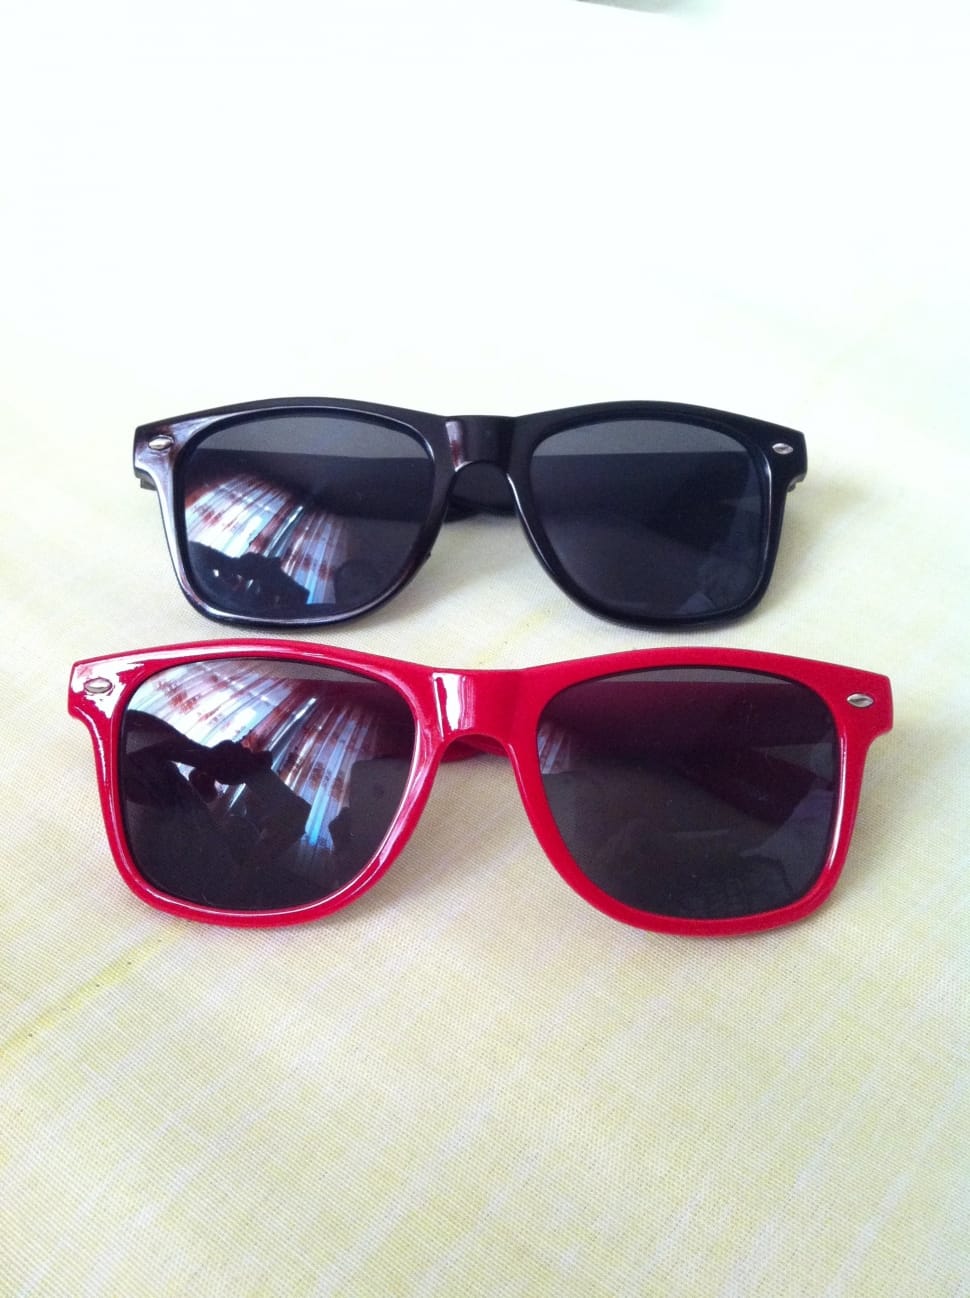 2 sunglasses preview